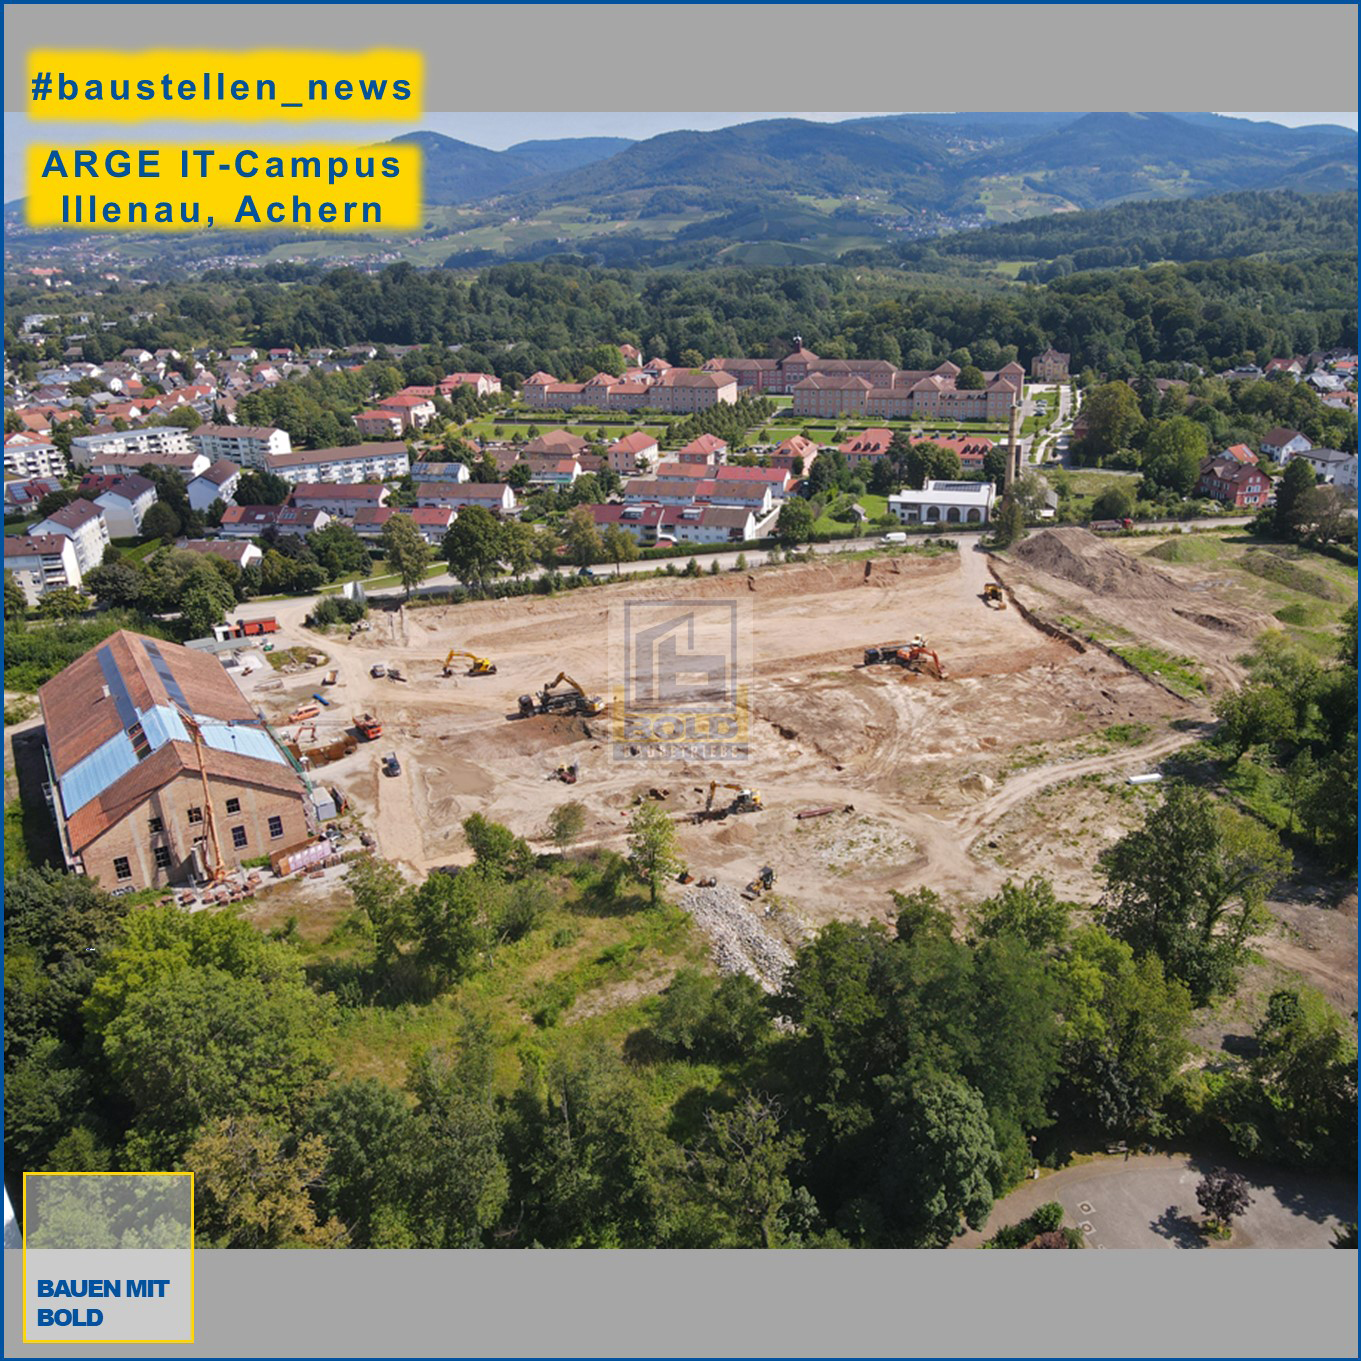 Baustellen-News – ARGE Powercloud Campus, Achern